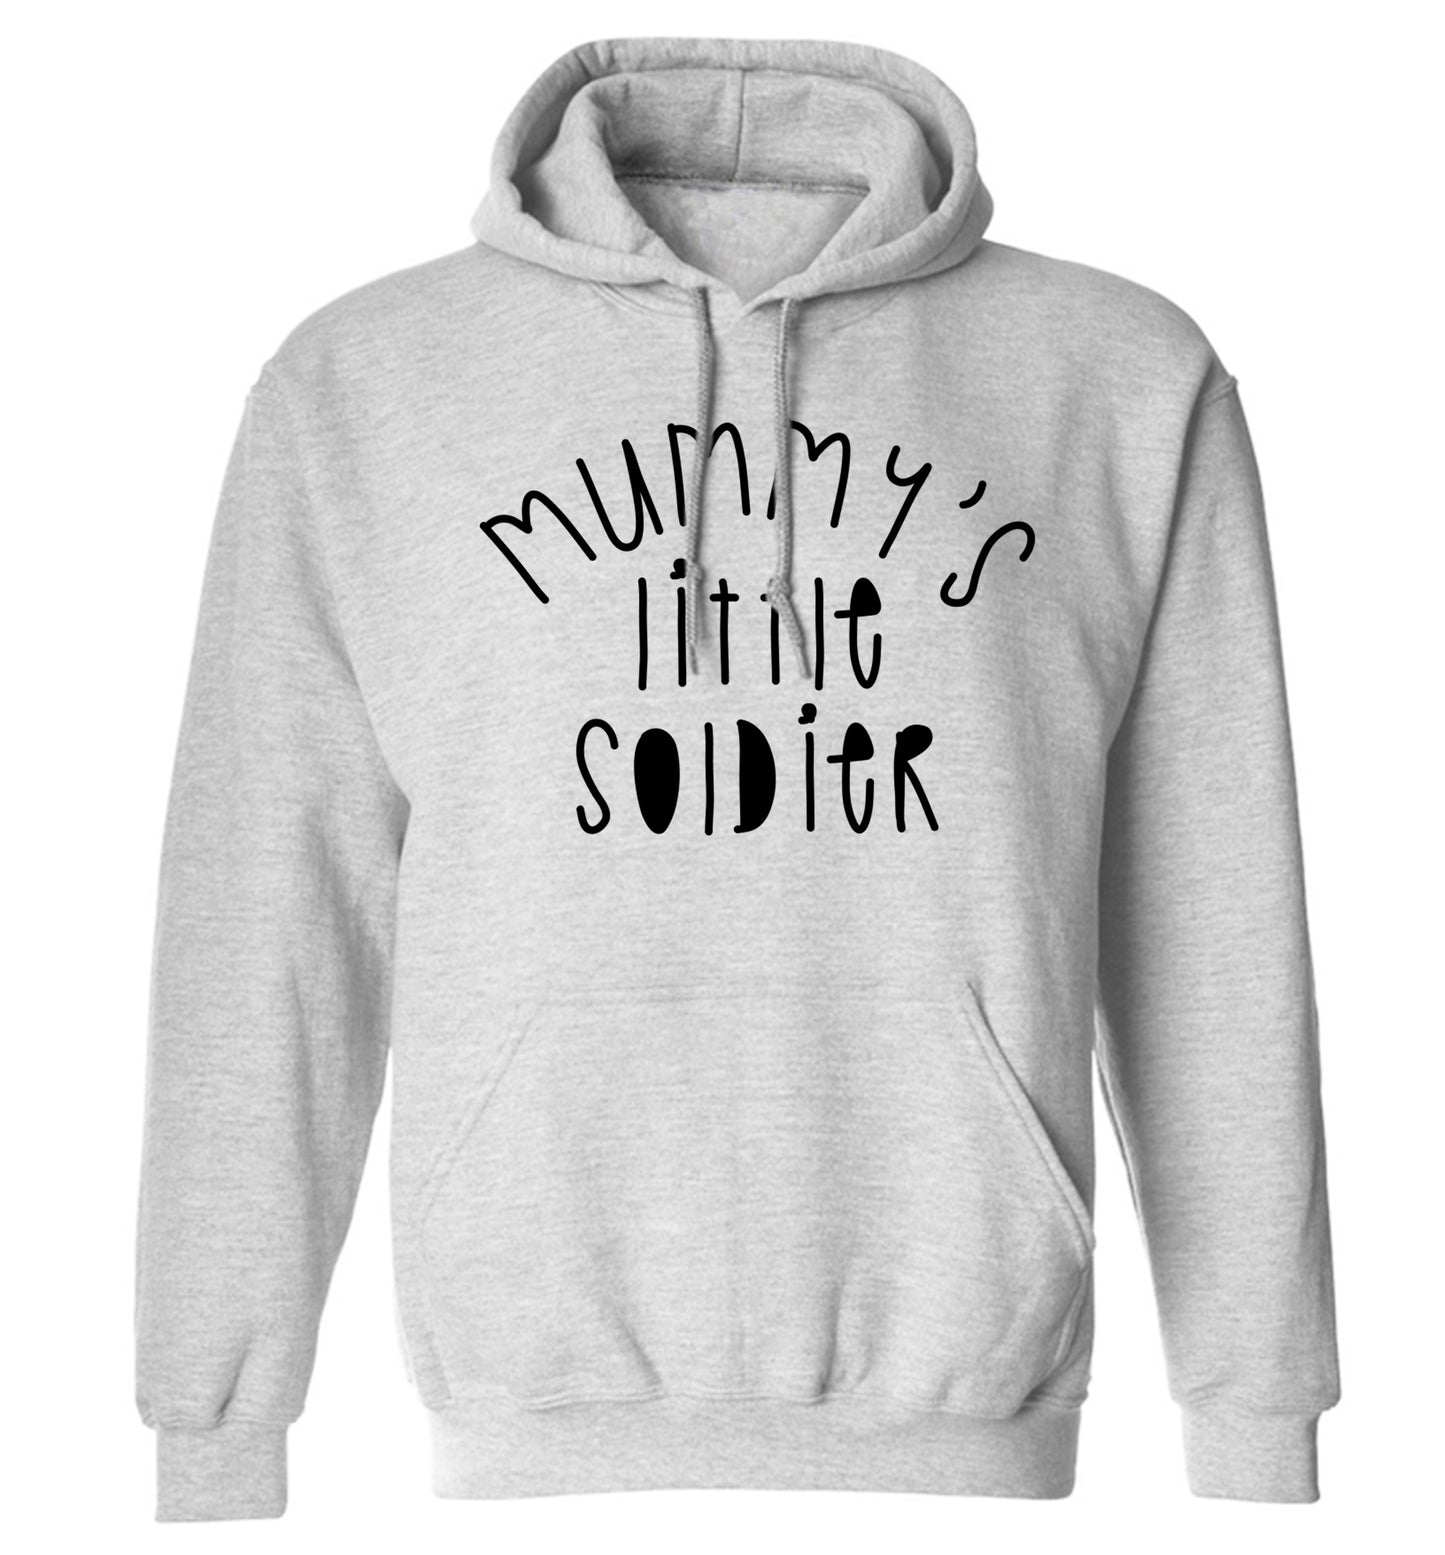 Mummy's little soldier adults unisex grey hoodie 2XL